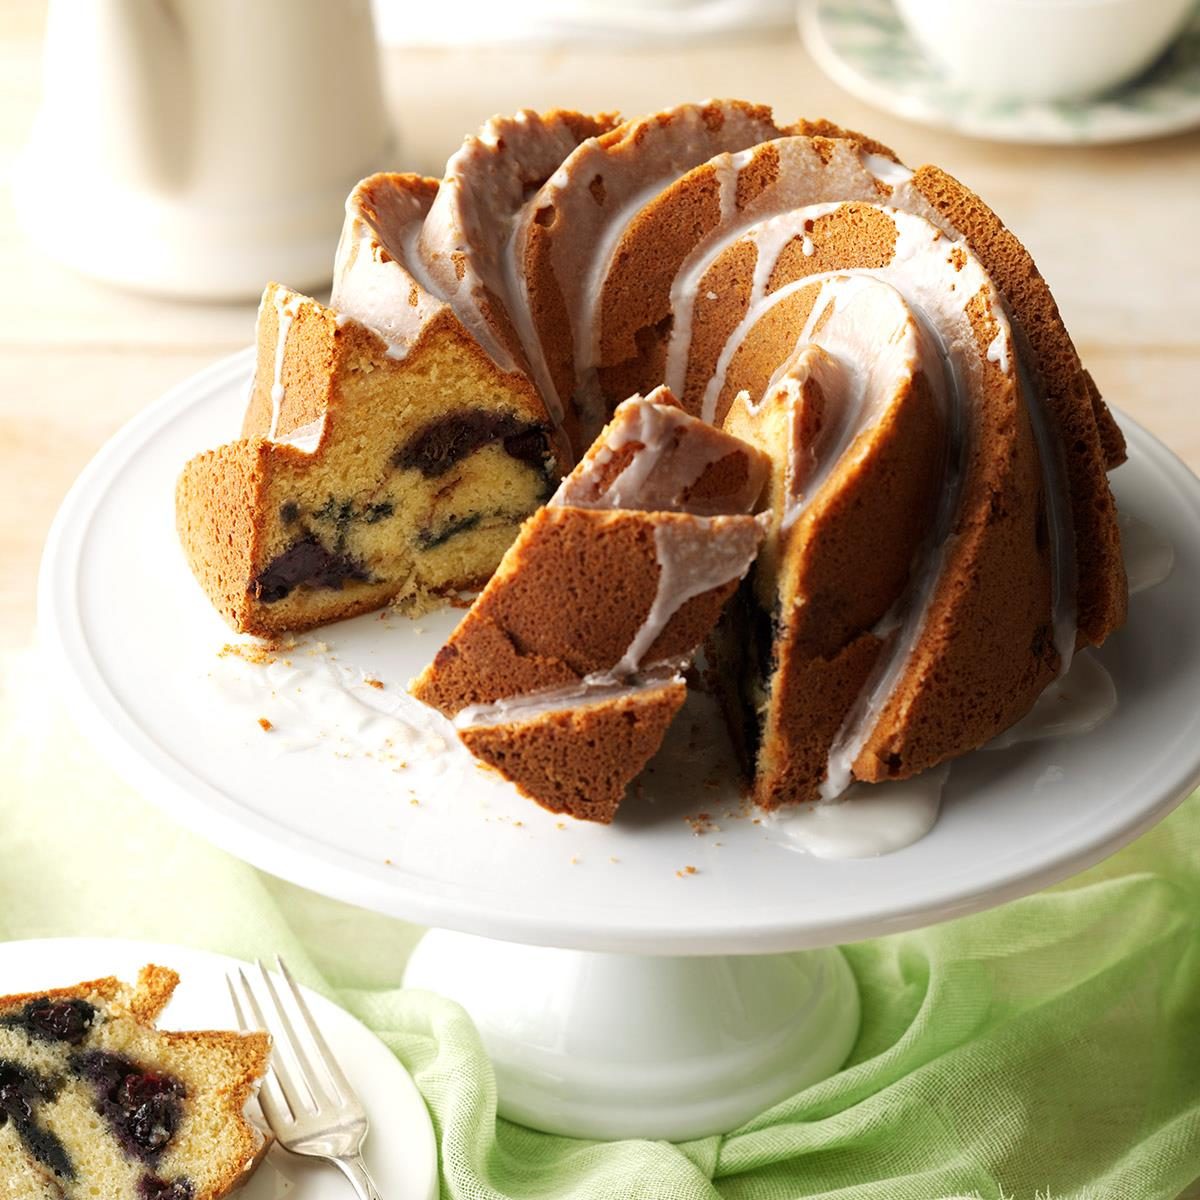 Blueberry Sour Cream Coffee Cake Recipe: How to Make It